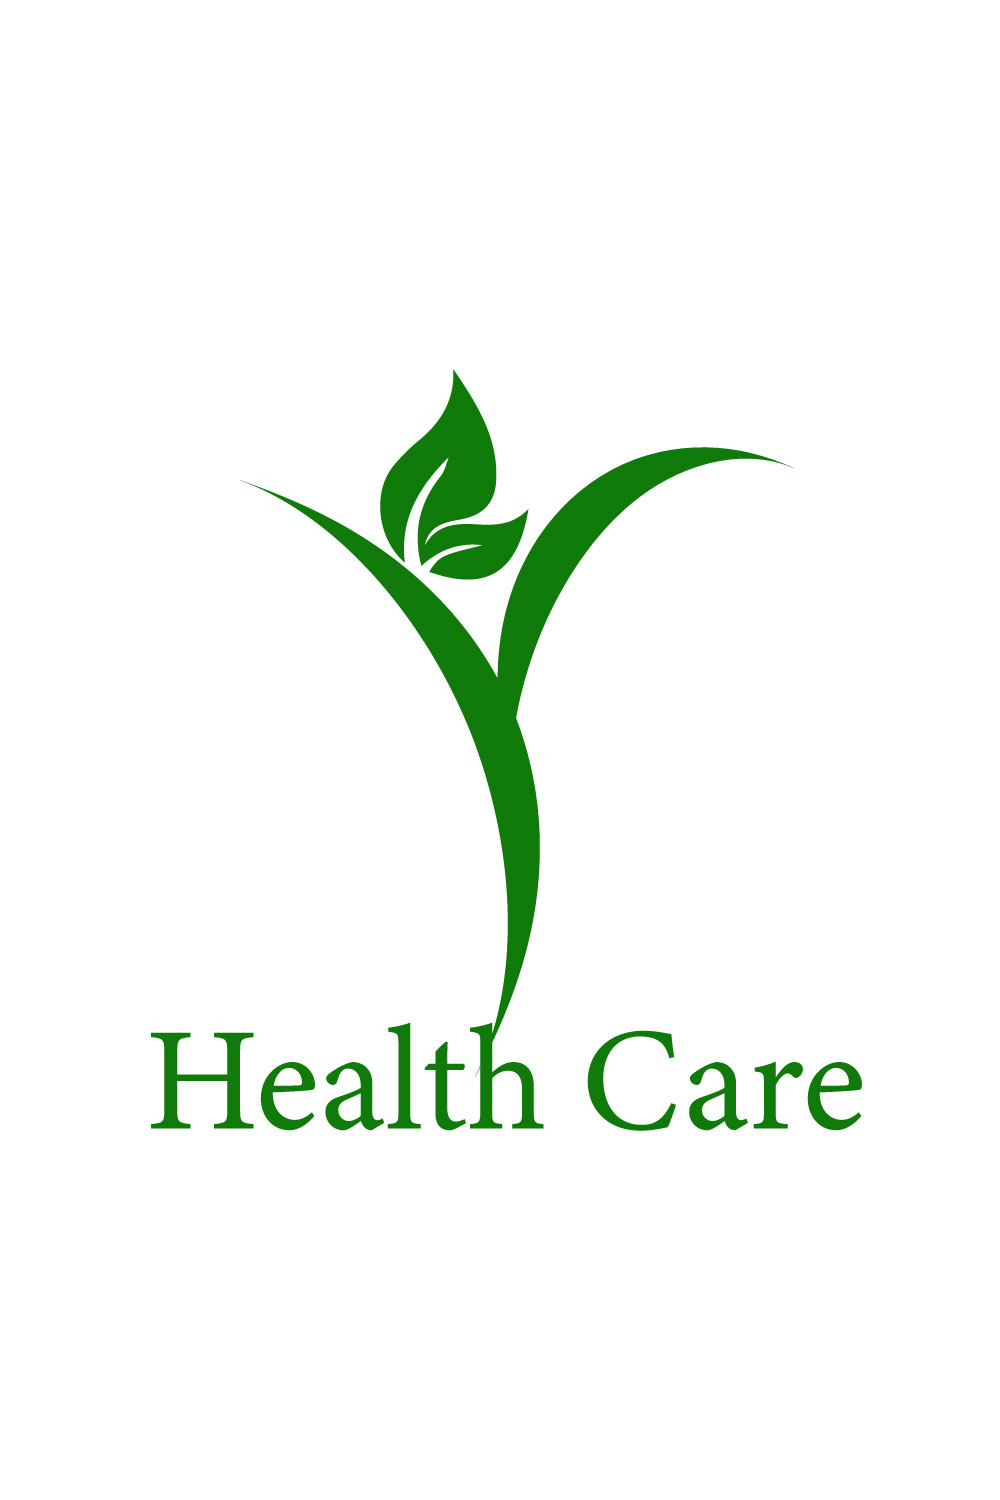 Free Green Wellness Mind Logo pinterest preview image.